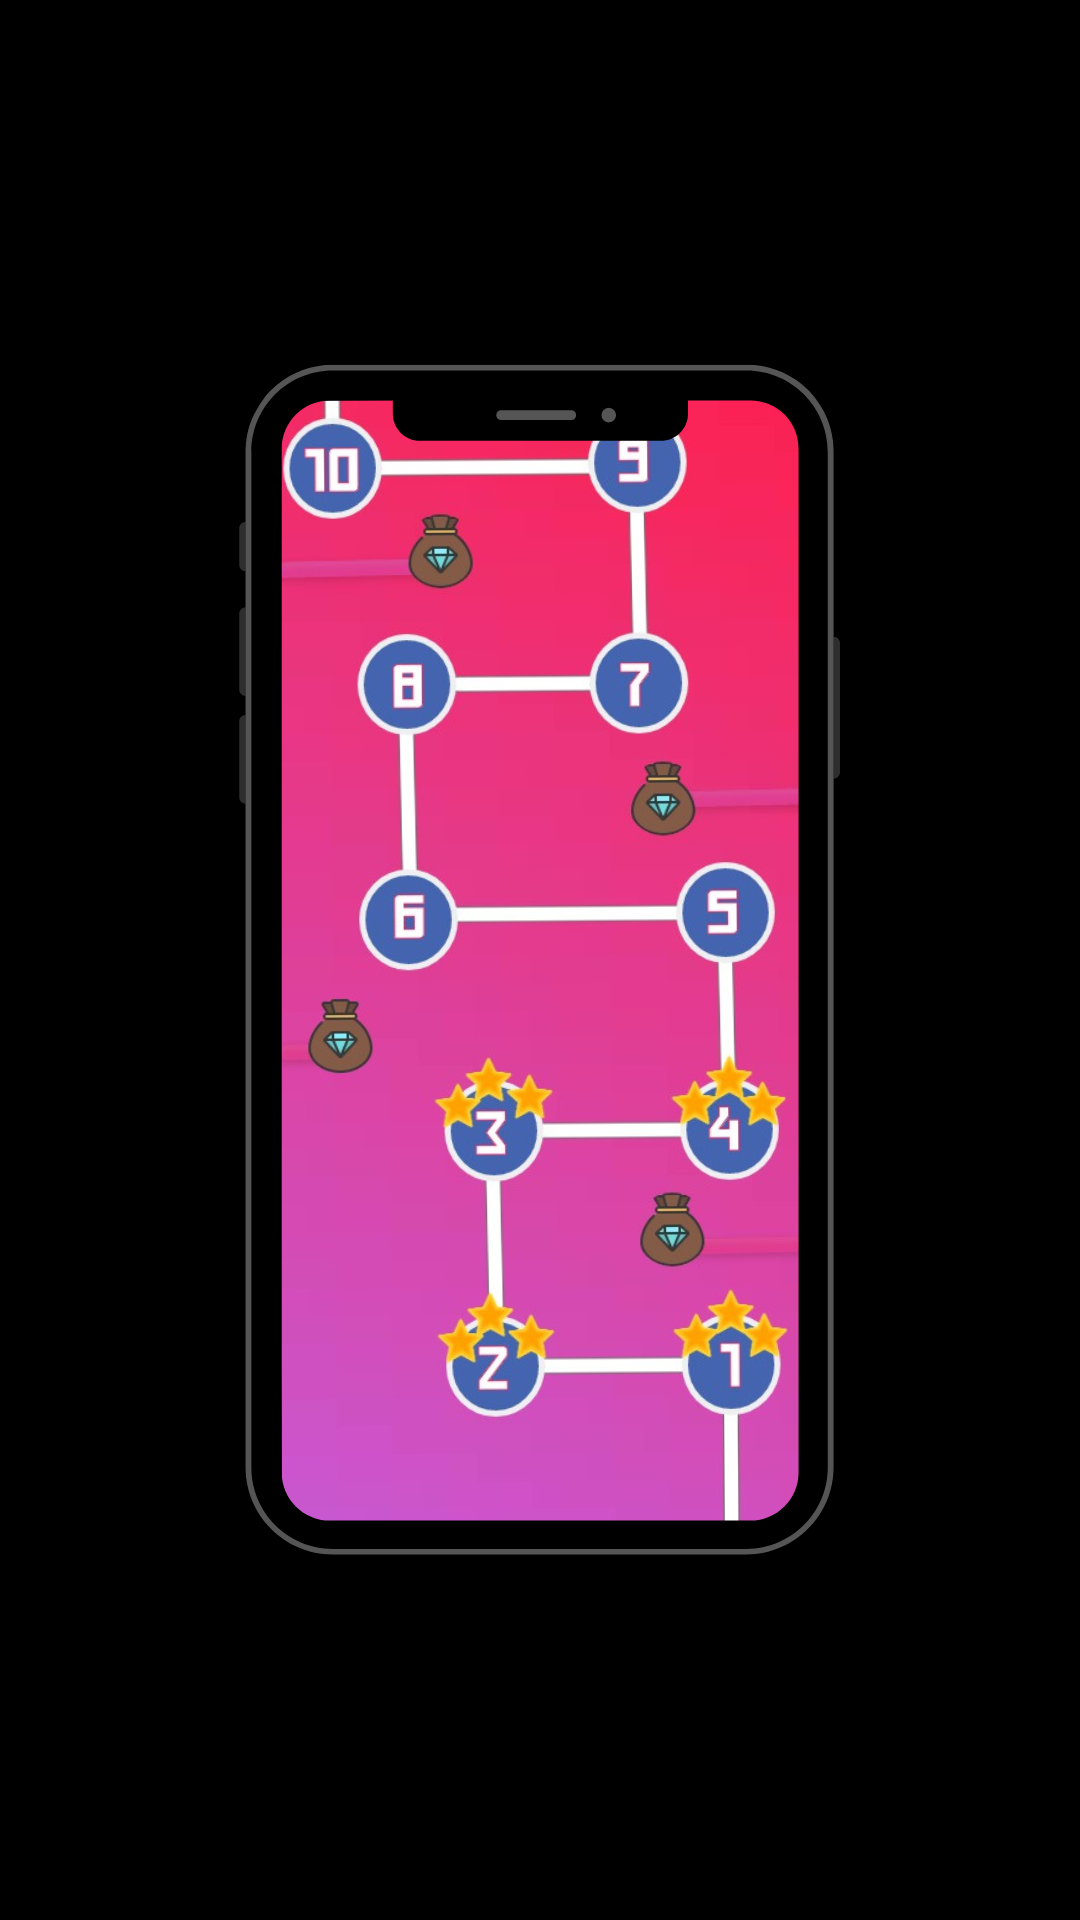 game
app 
gems
mobile
UI